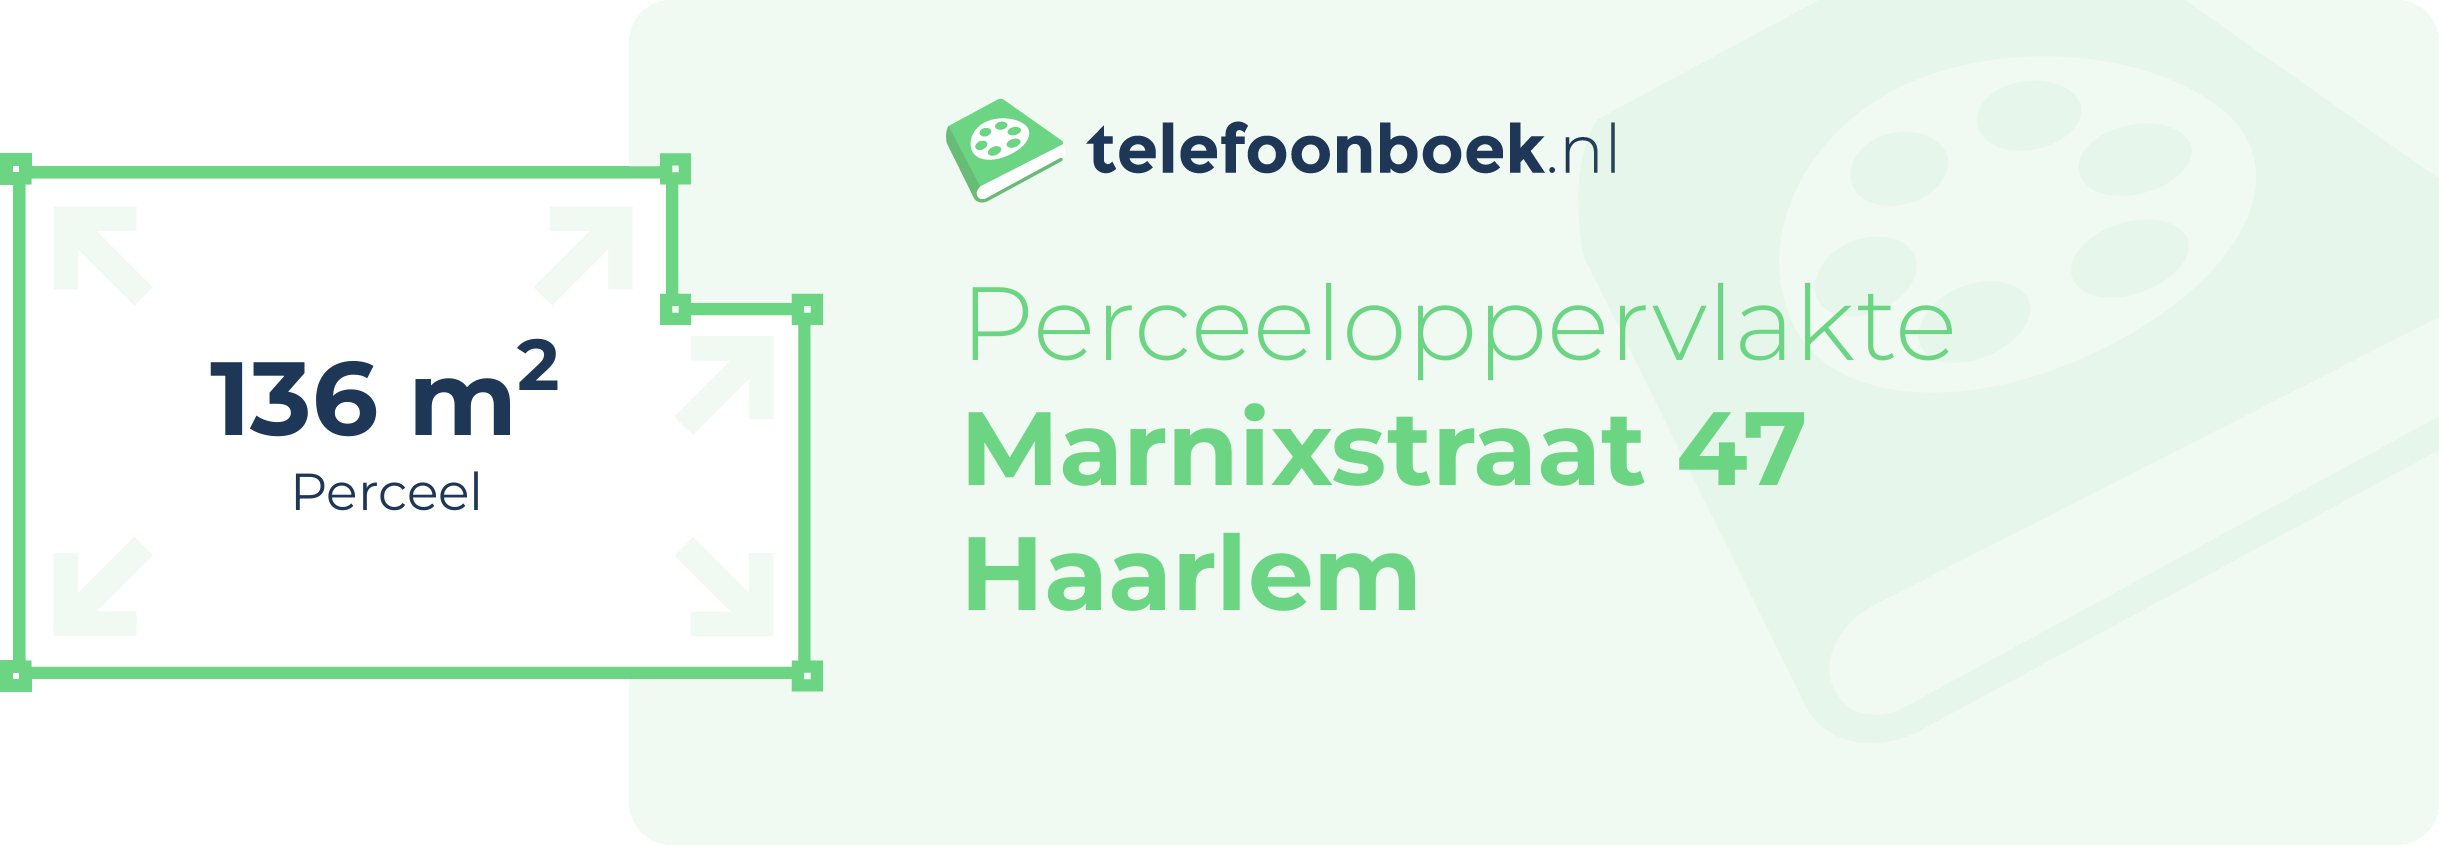 Perceeloppervlakte Marnixstraat 47 Haarlem